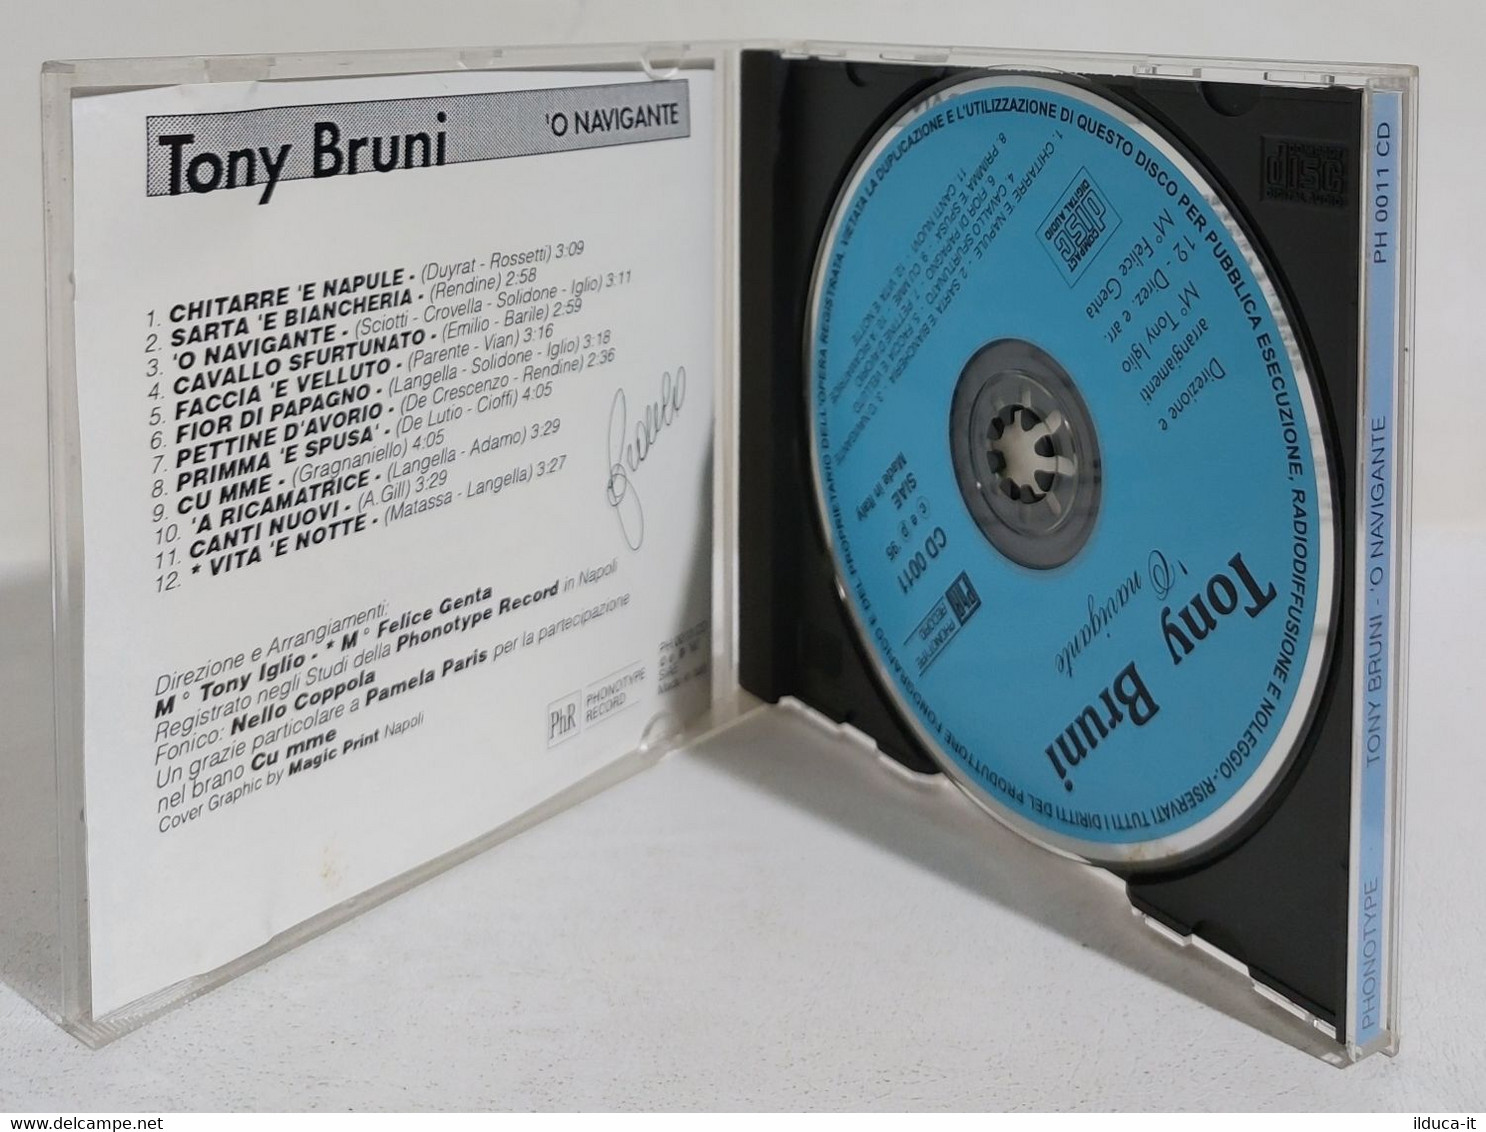 I107880 CD - Tony Bruni - 'O Navigante - Phr 1992 - Other - Italian Music